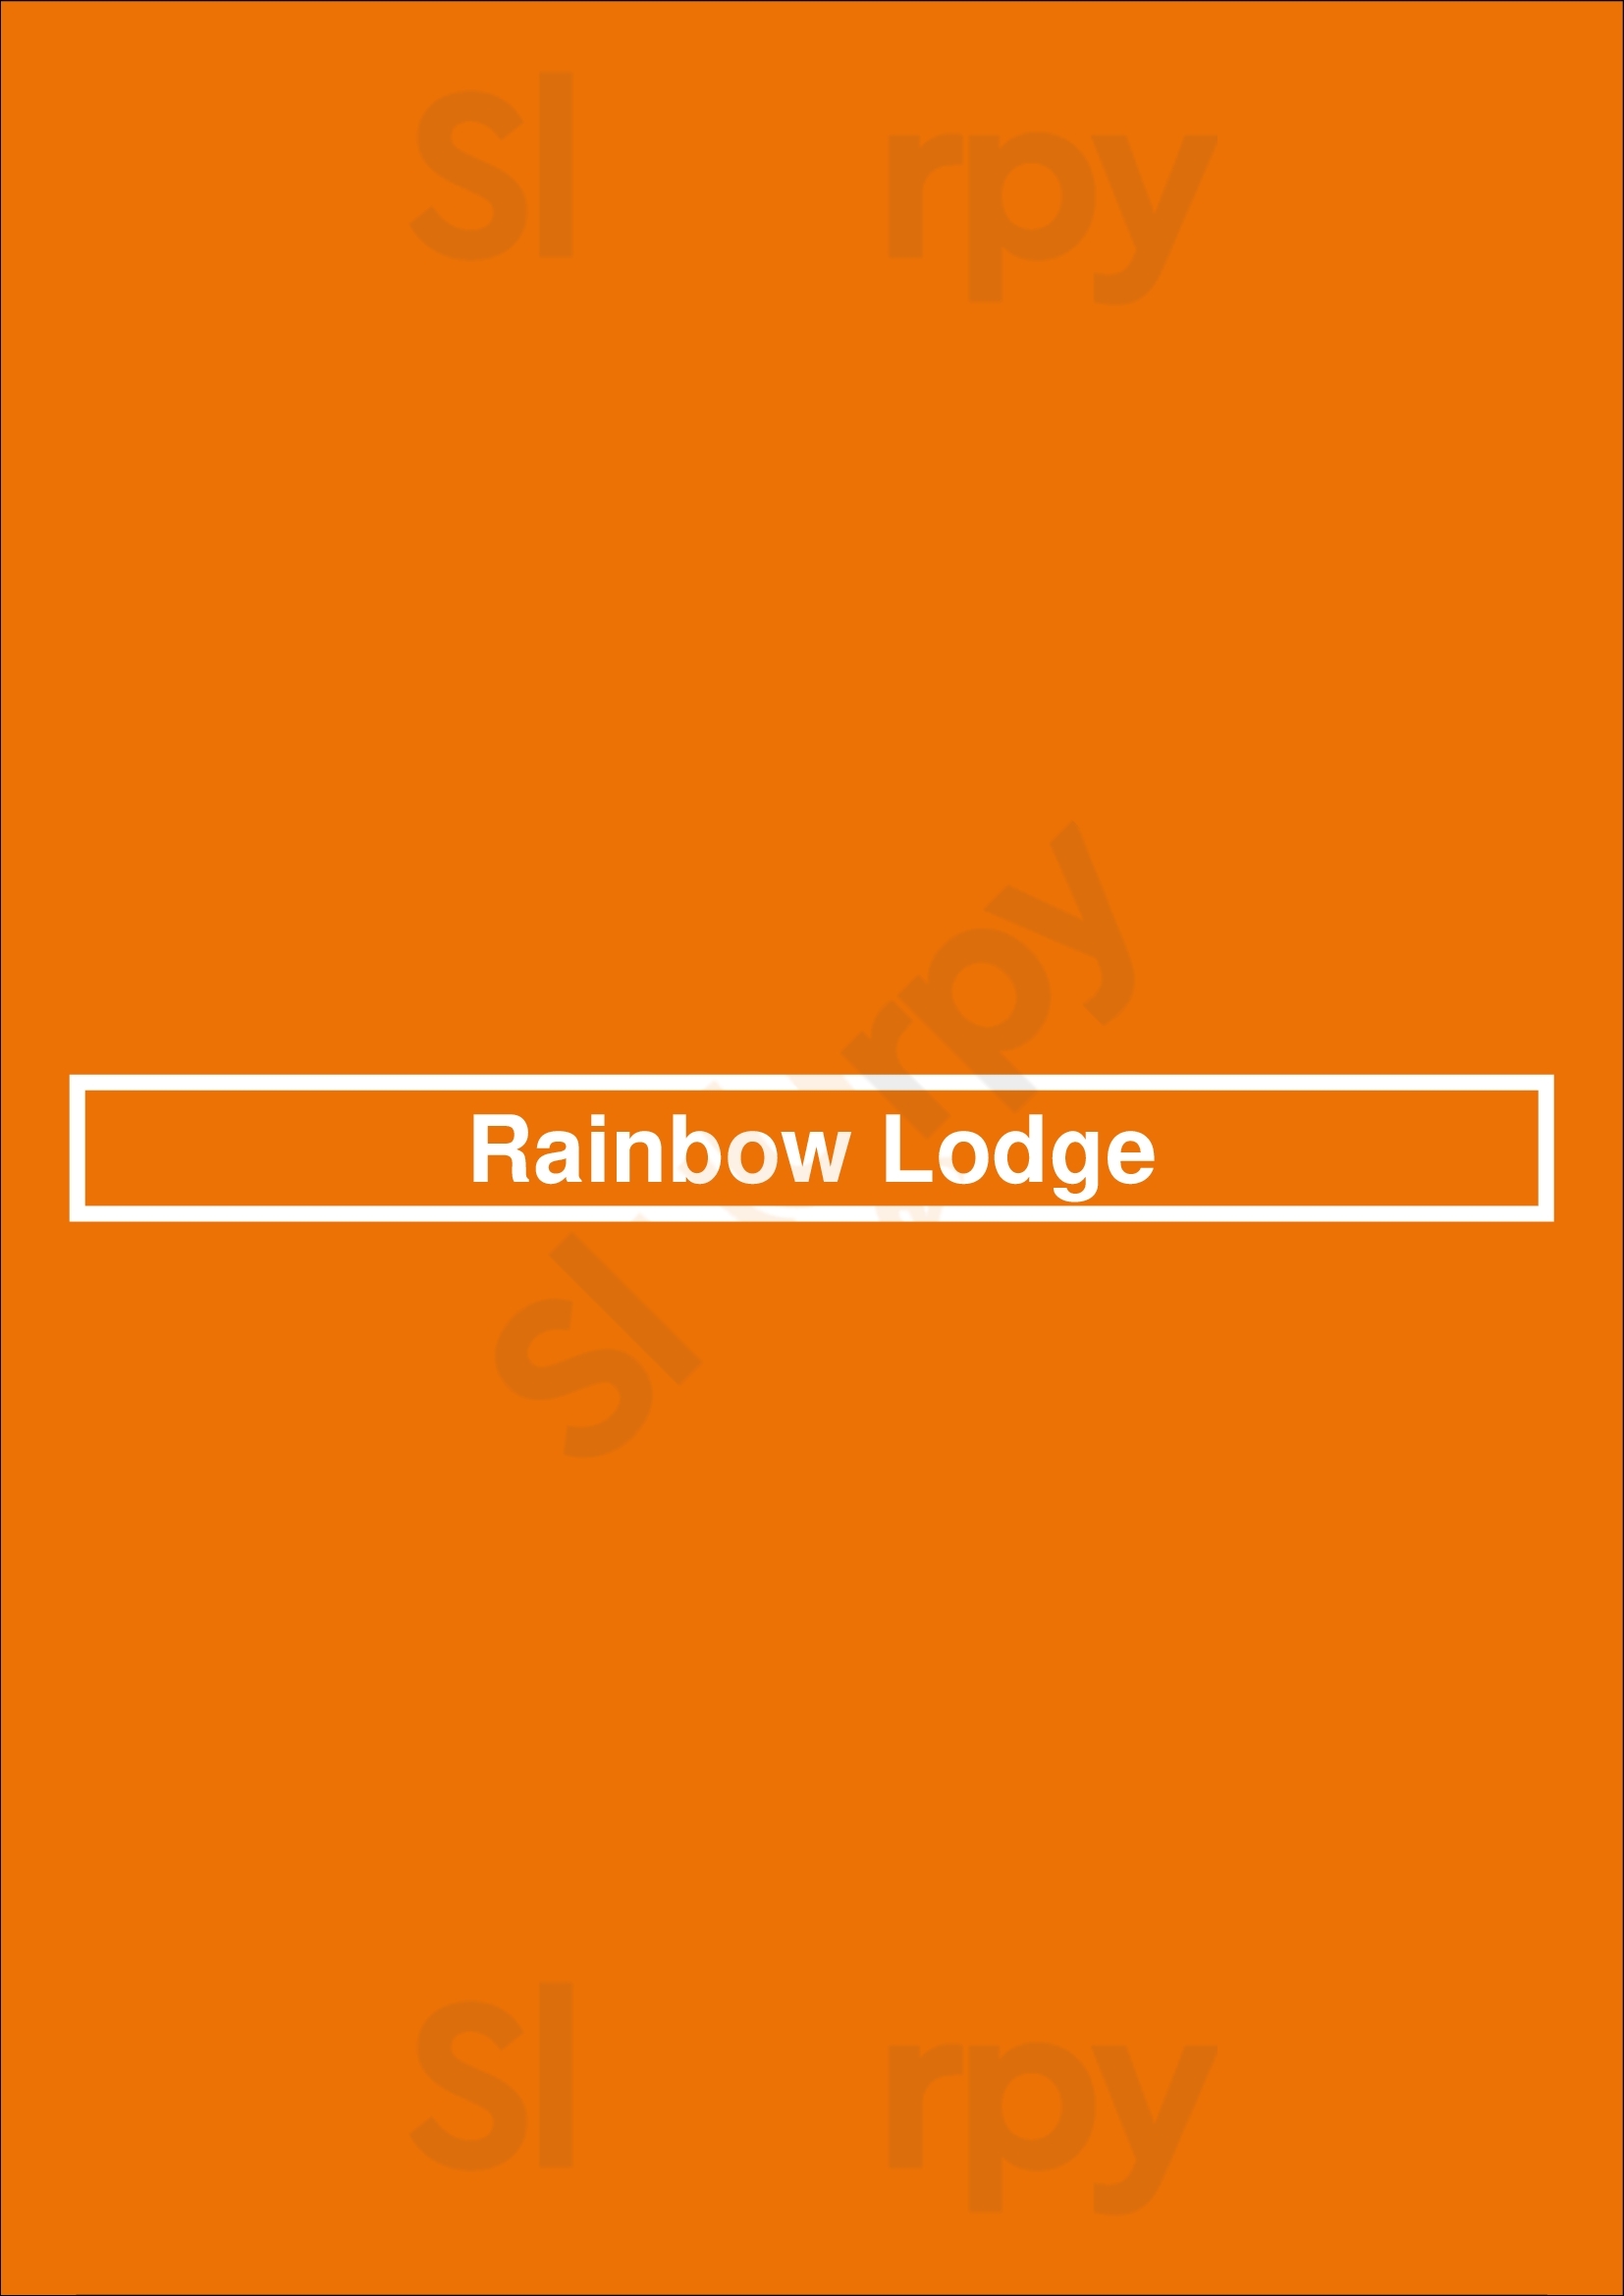 Rainbow Lodge Houston Menu - 1